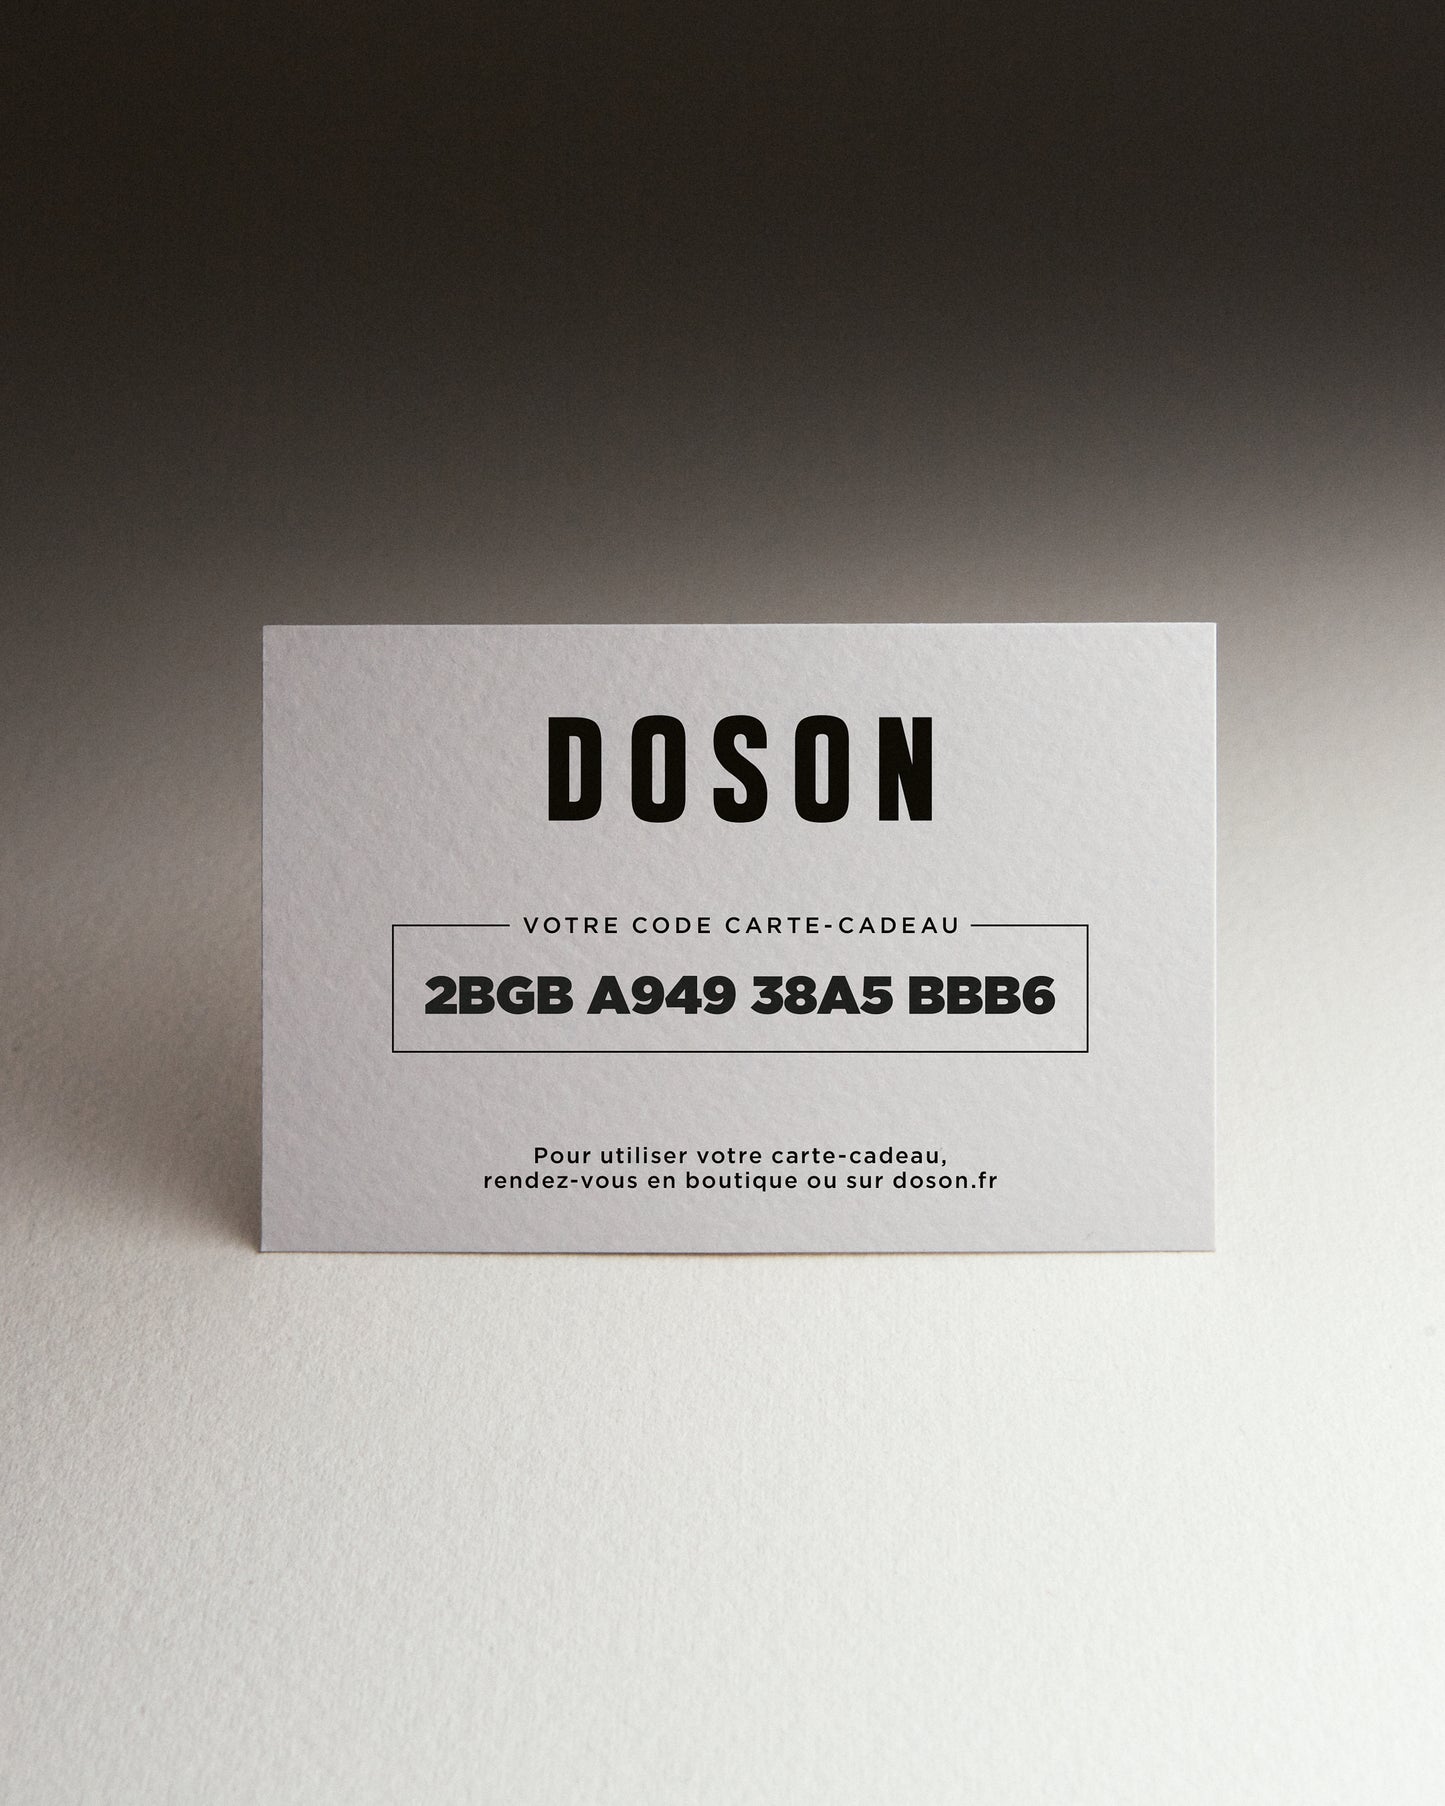 Doson gift card